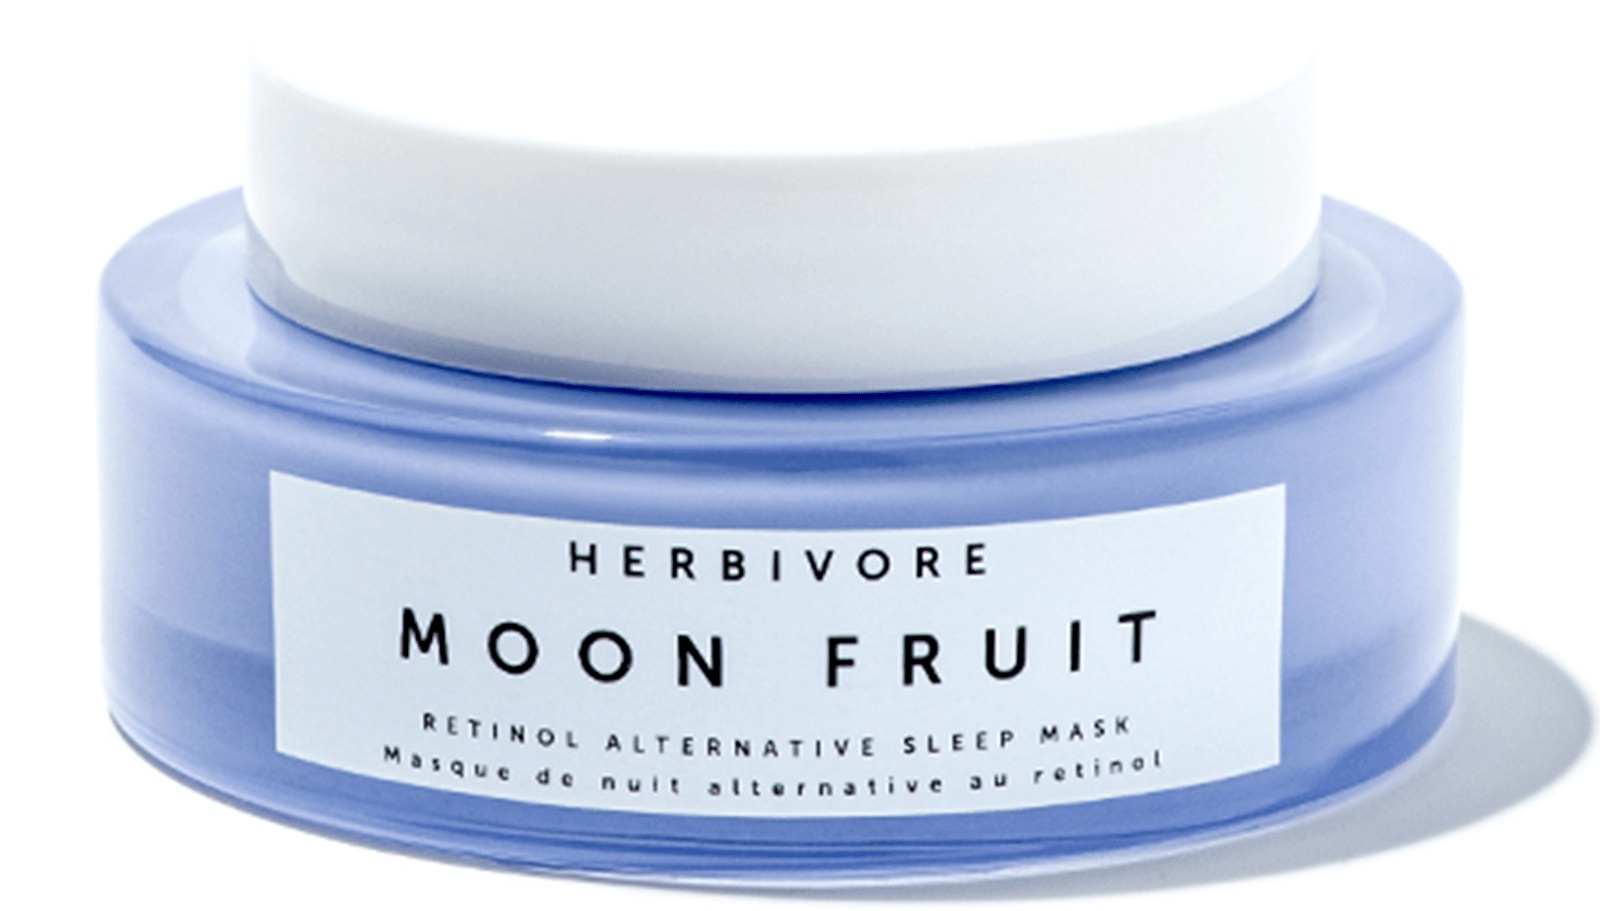 Herbivore Moon Fruit Retinol Alternative Sleep Mask